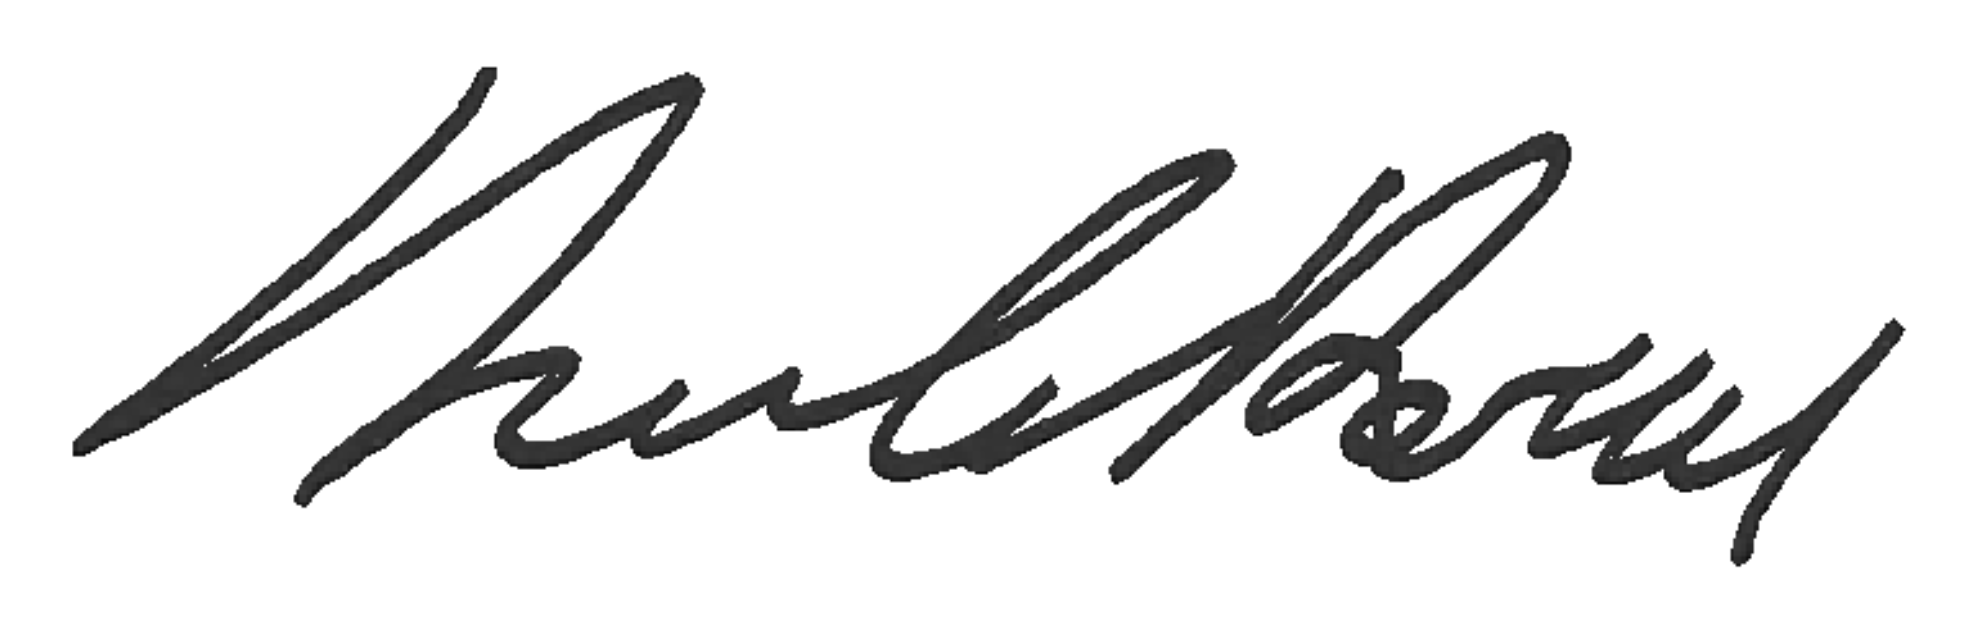 signature of president